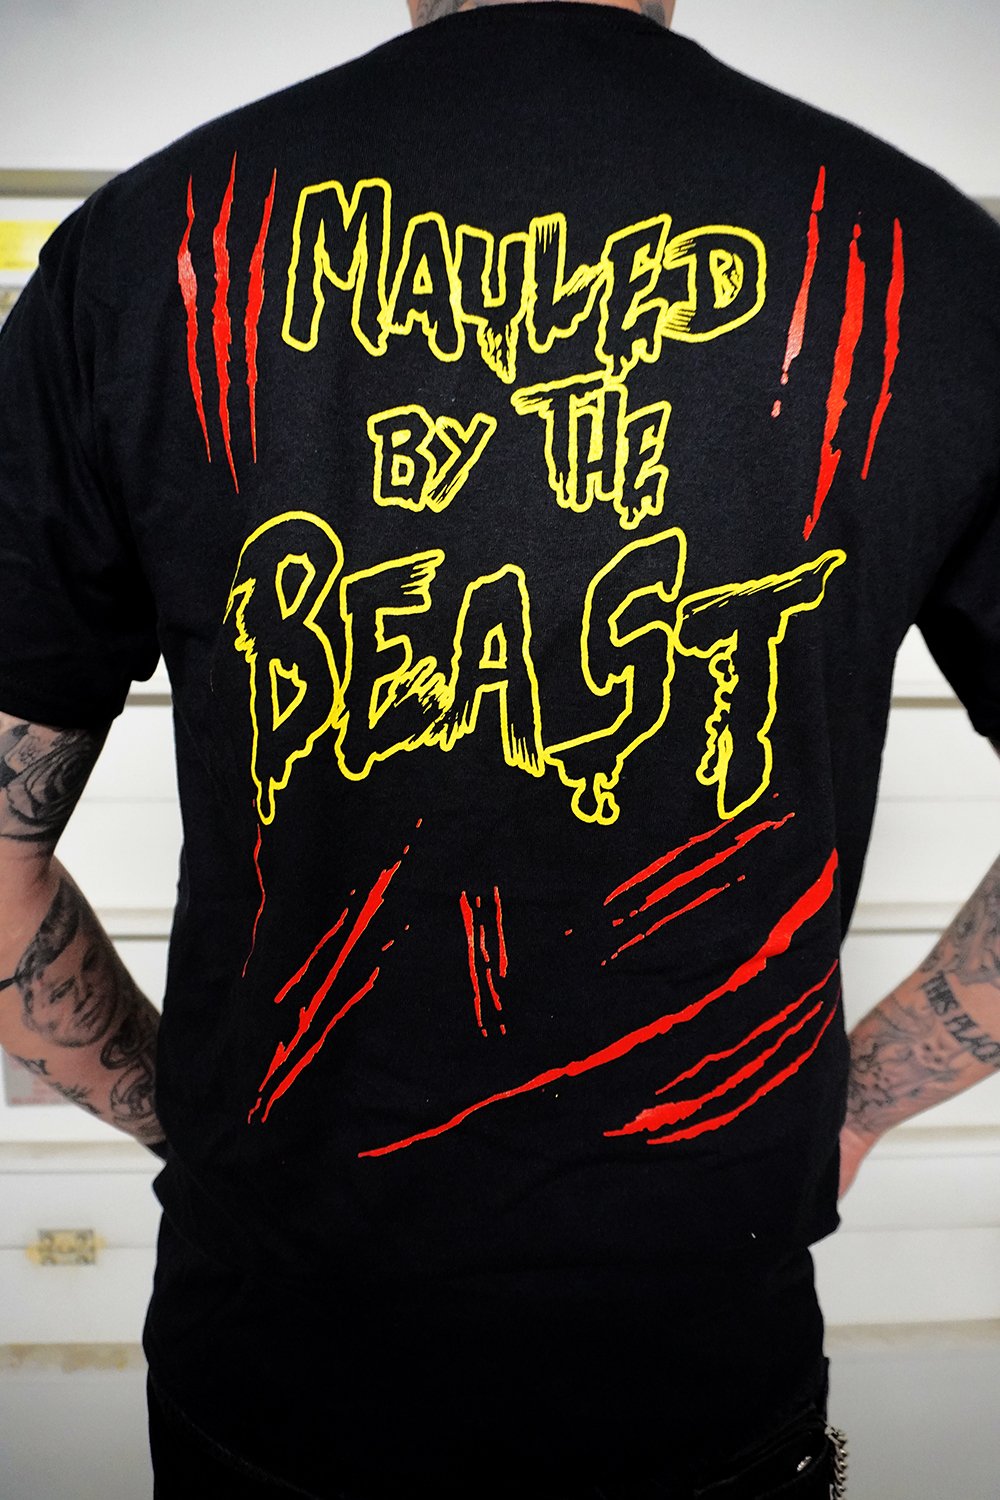 Mauled by the Beast T-Shirt